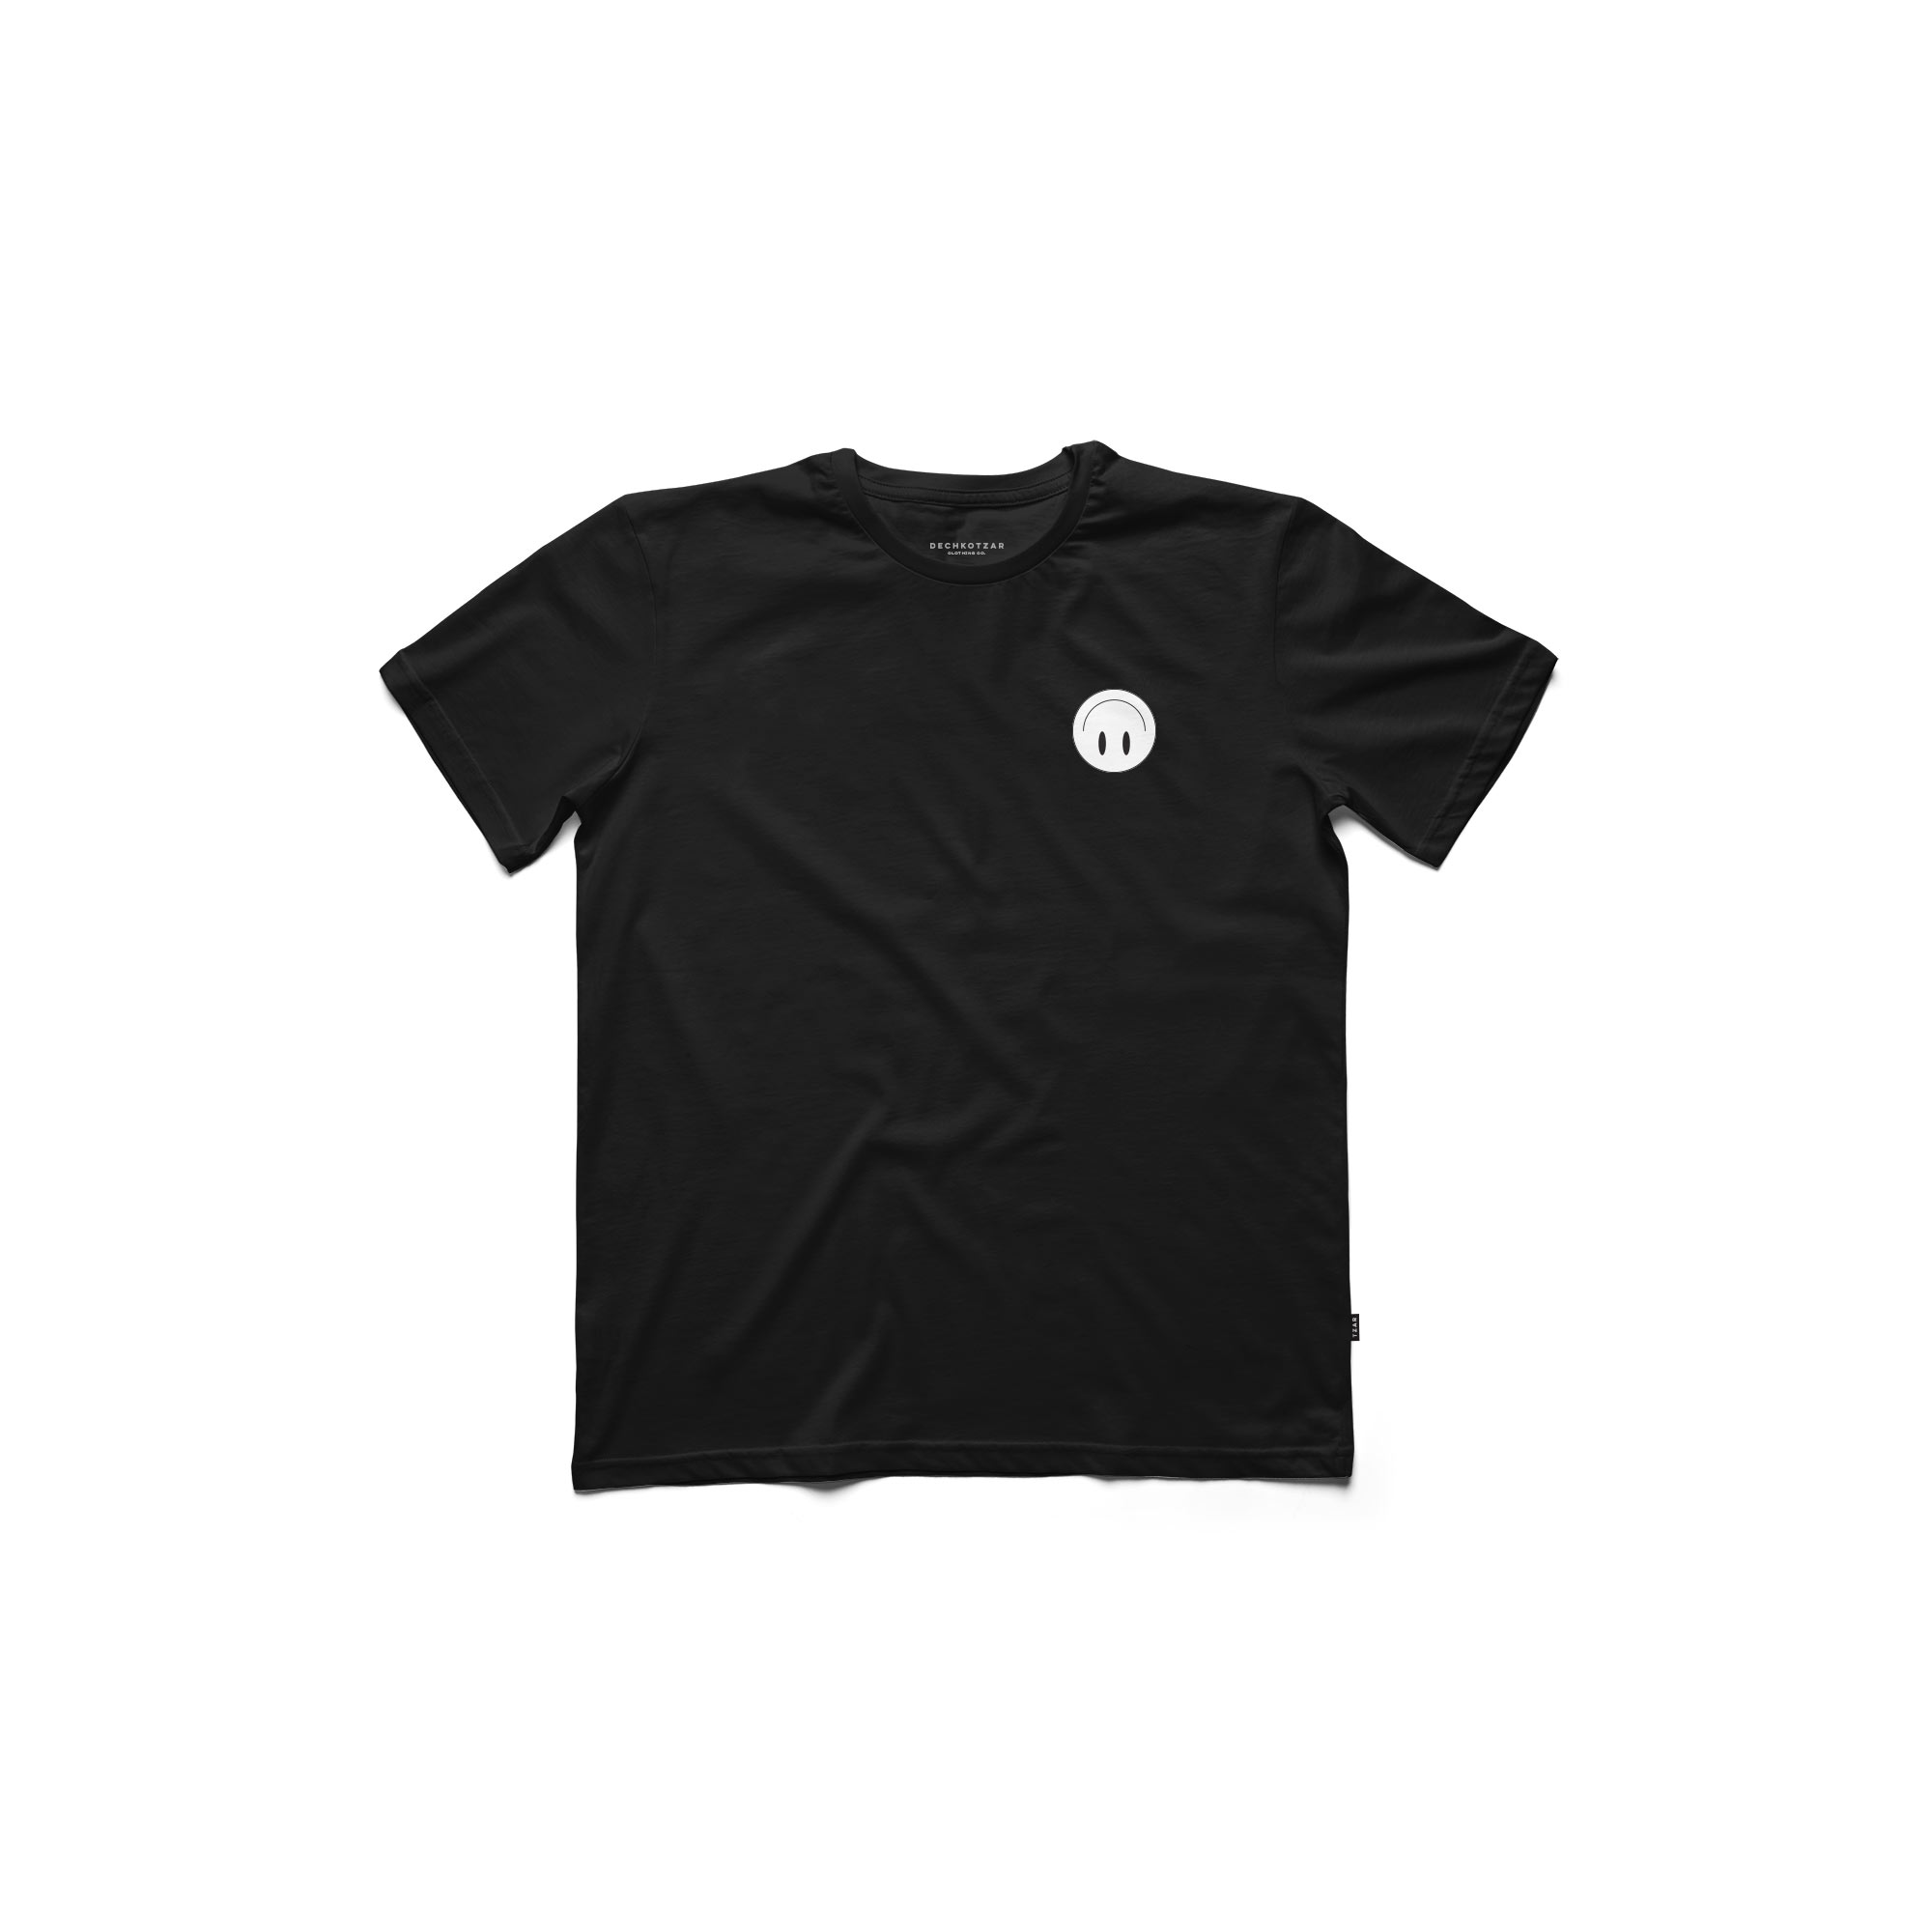 La Fenêtre, men’s black t-shirt – DechkoTzar